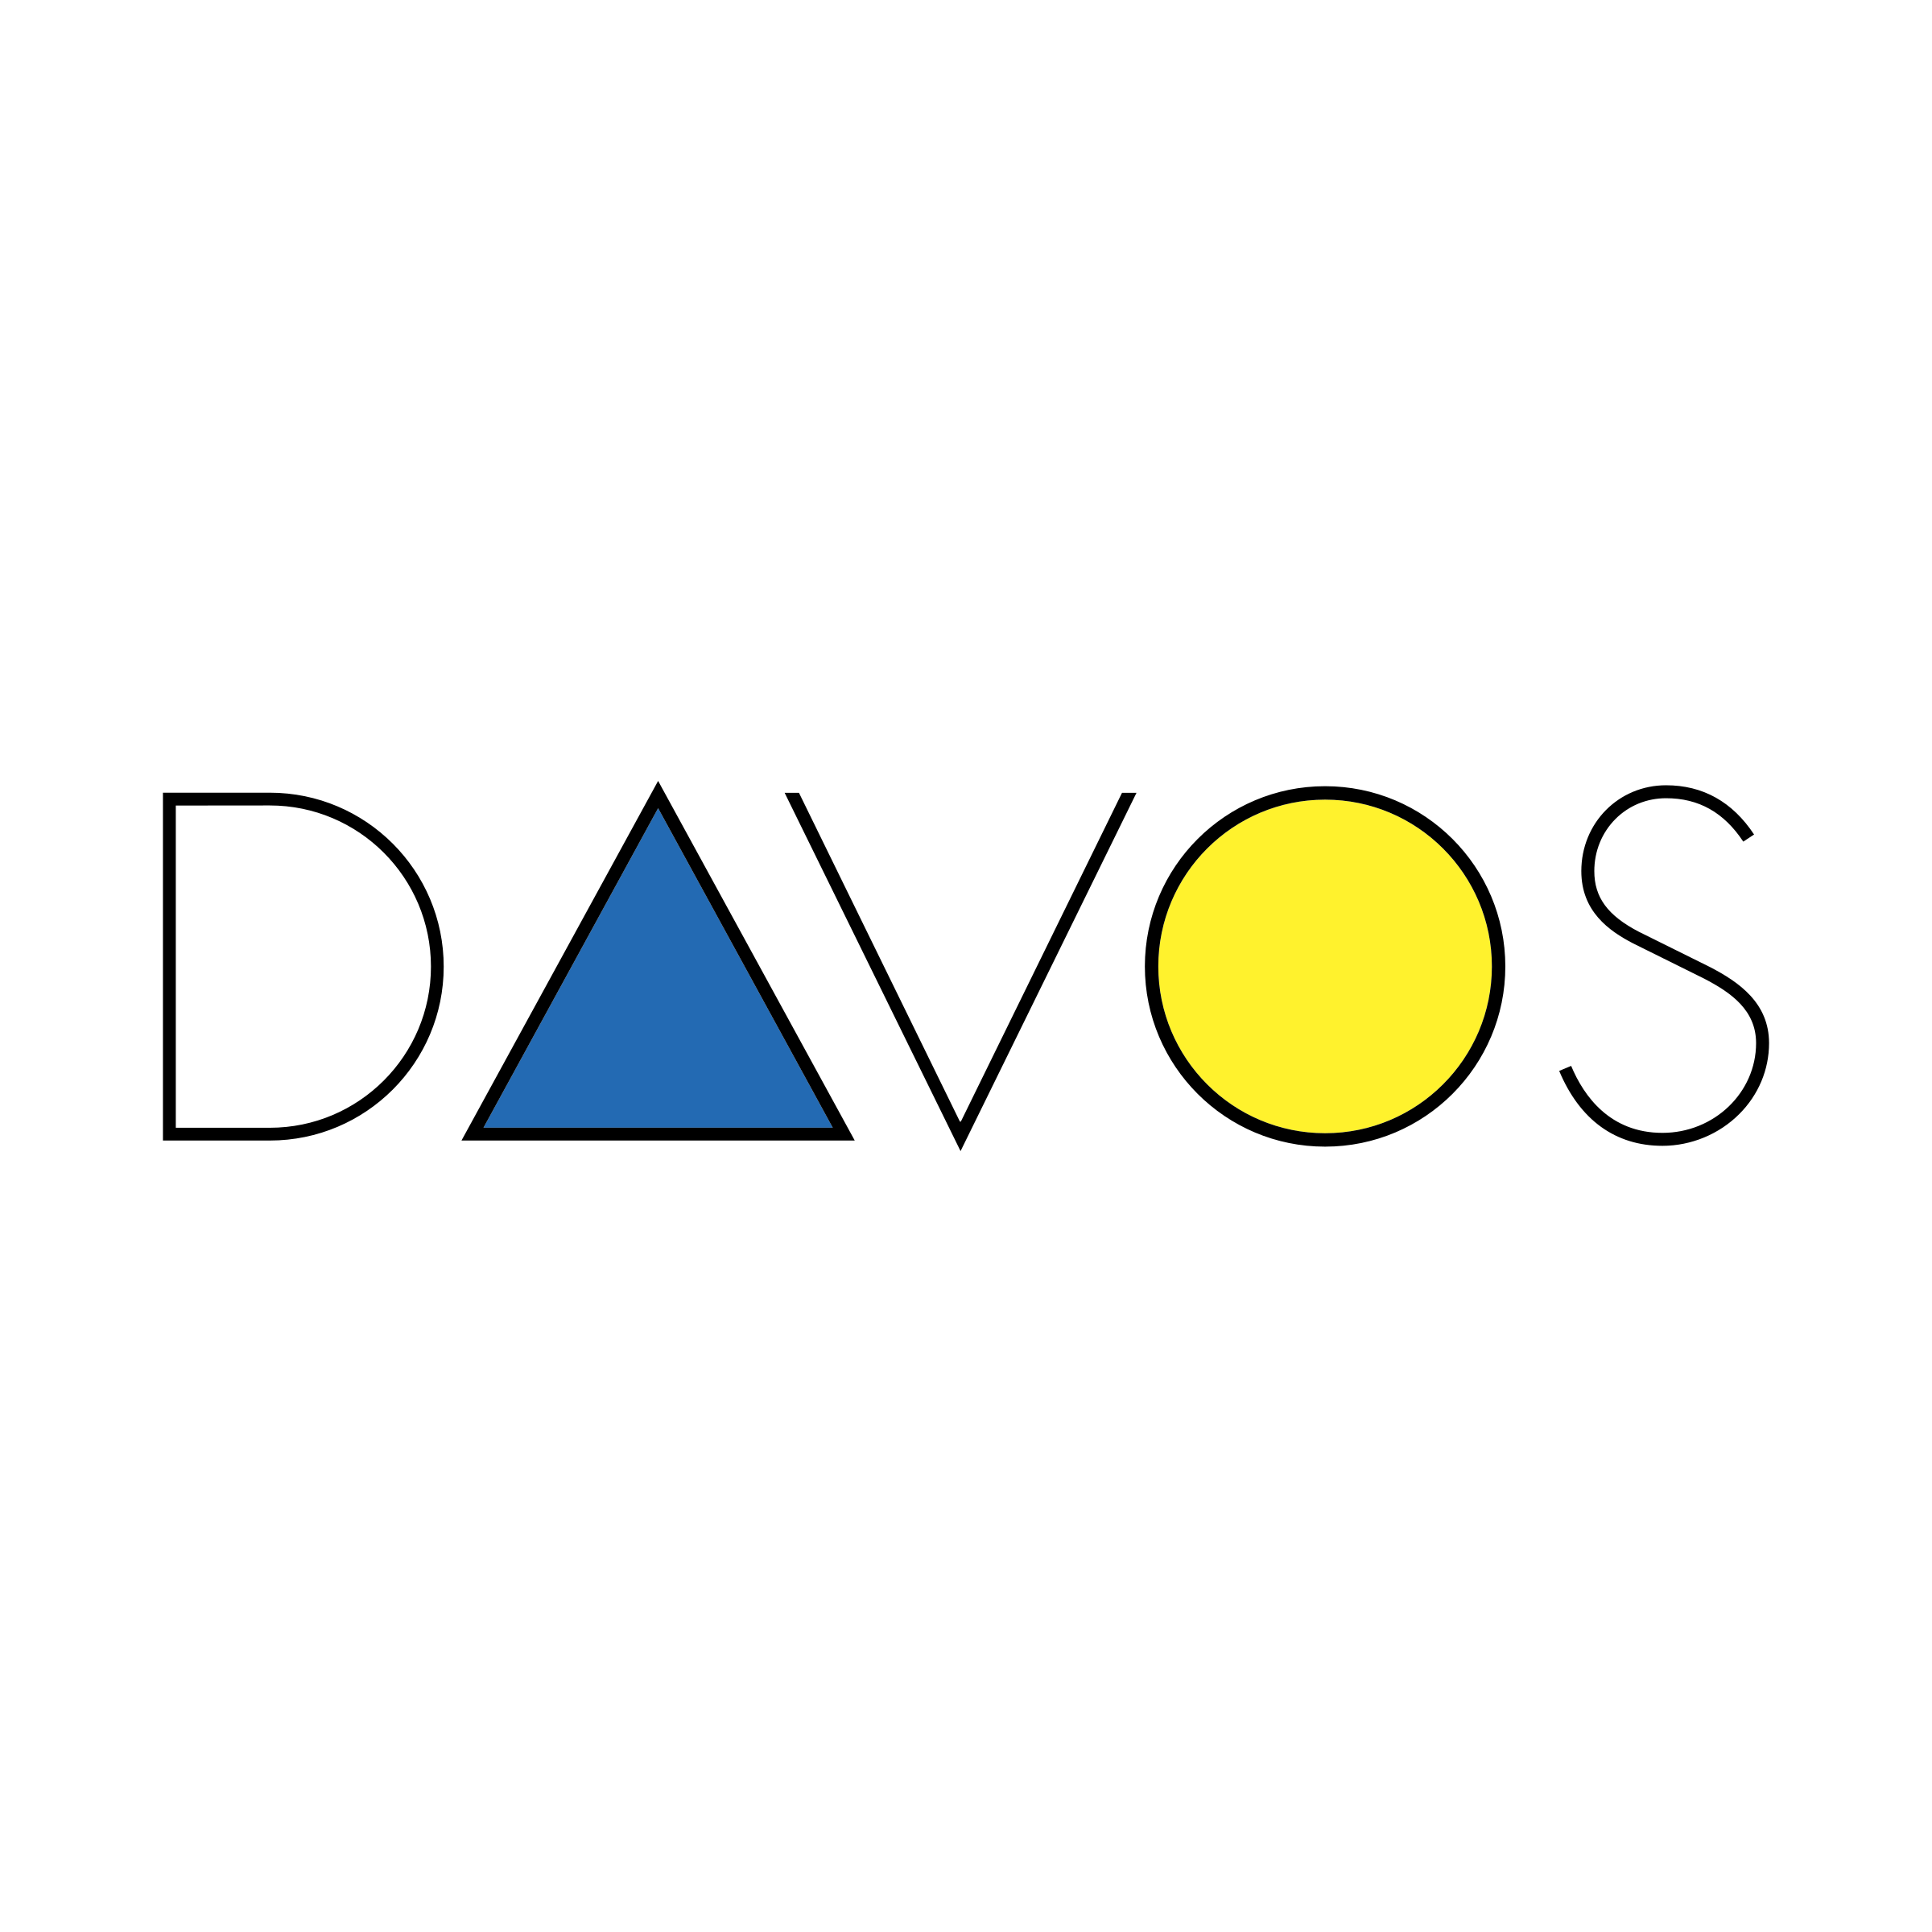 Davos Logo - Davos Logo PNG Transparent & SVG Vector